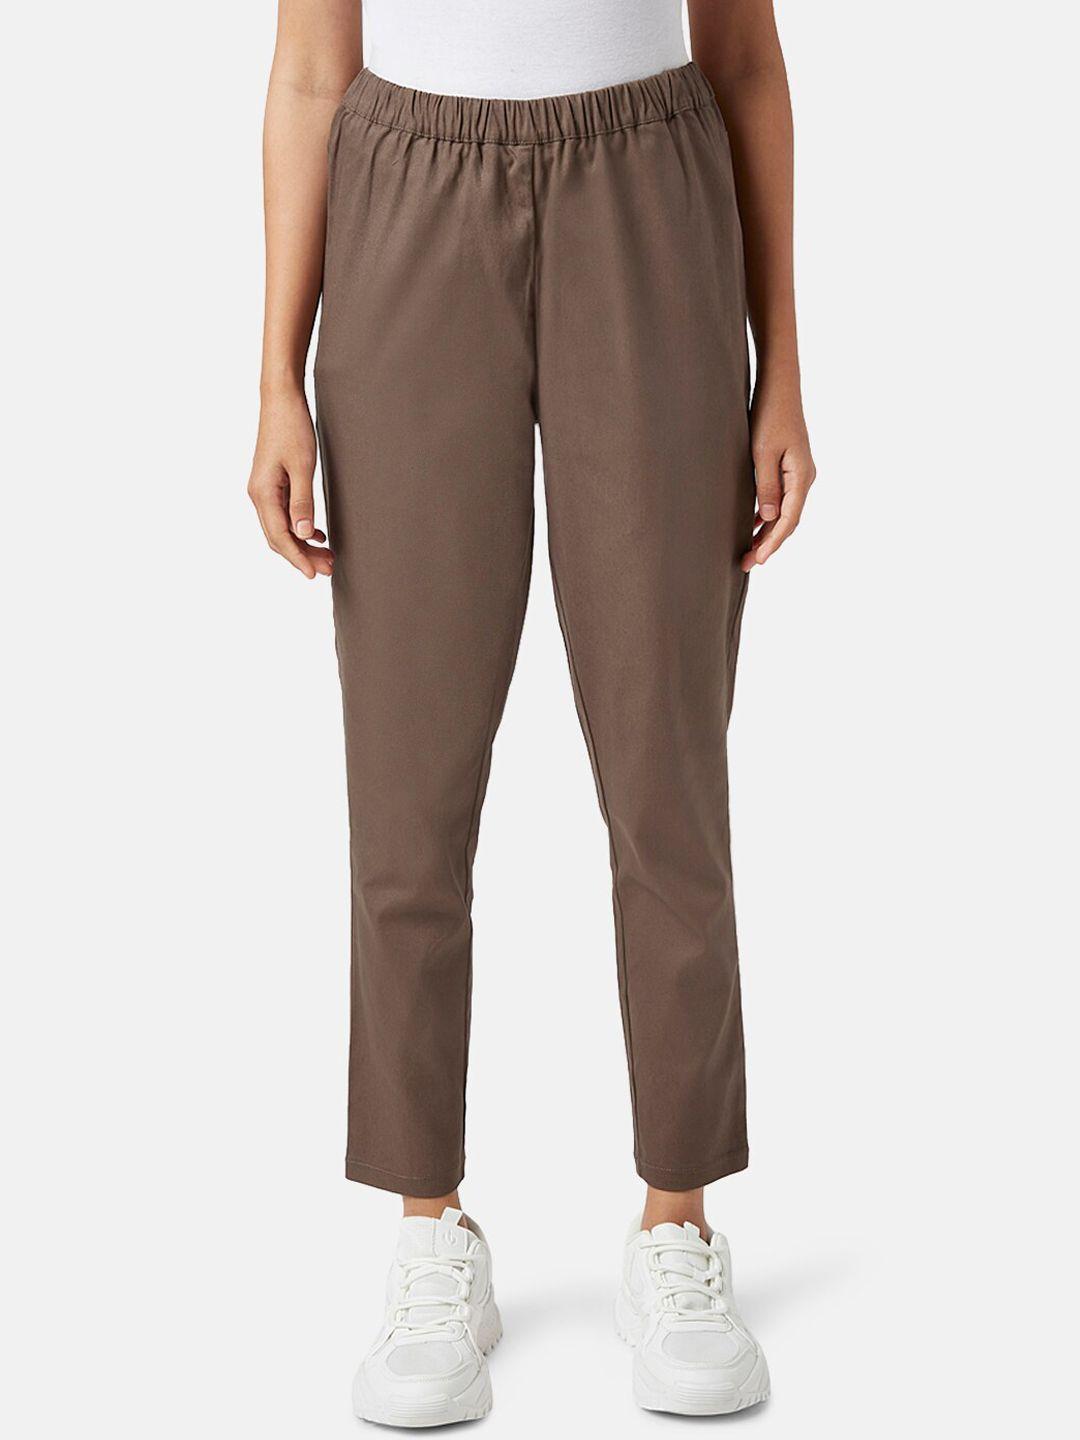 akkriti by pantaloons women cotton mid-rise skinny fit slip-on trousers